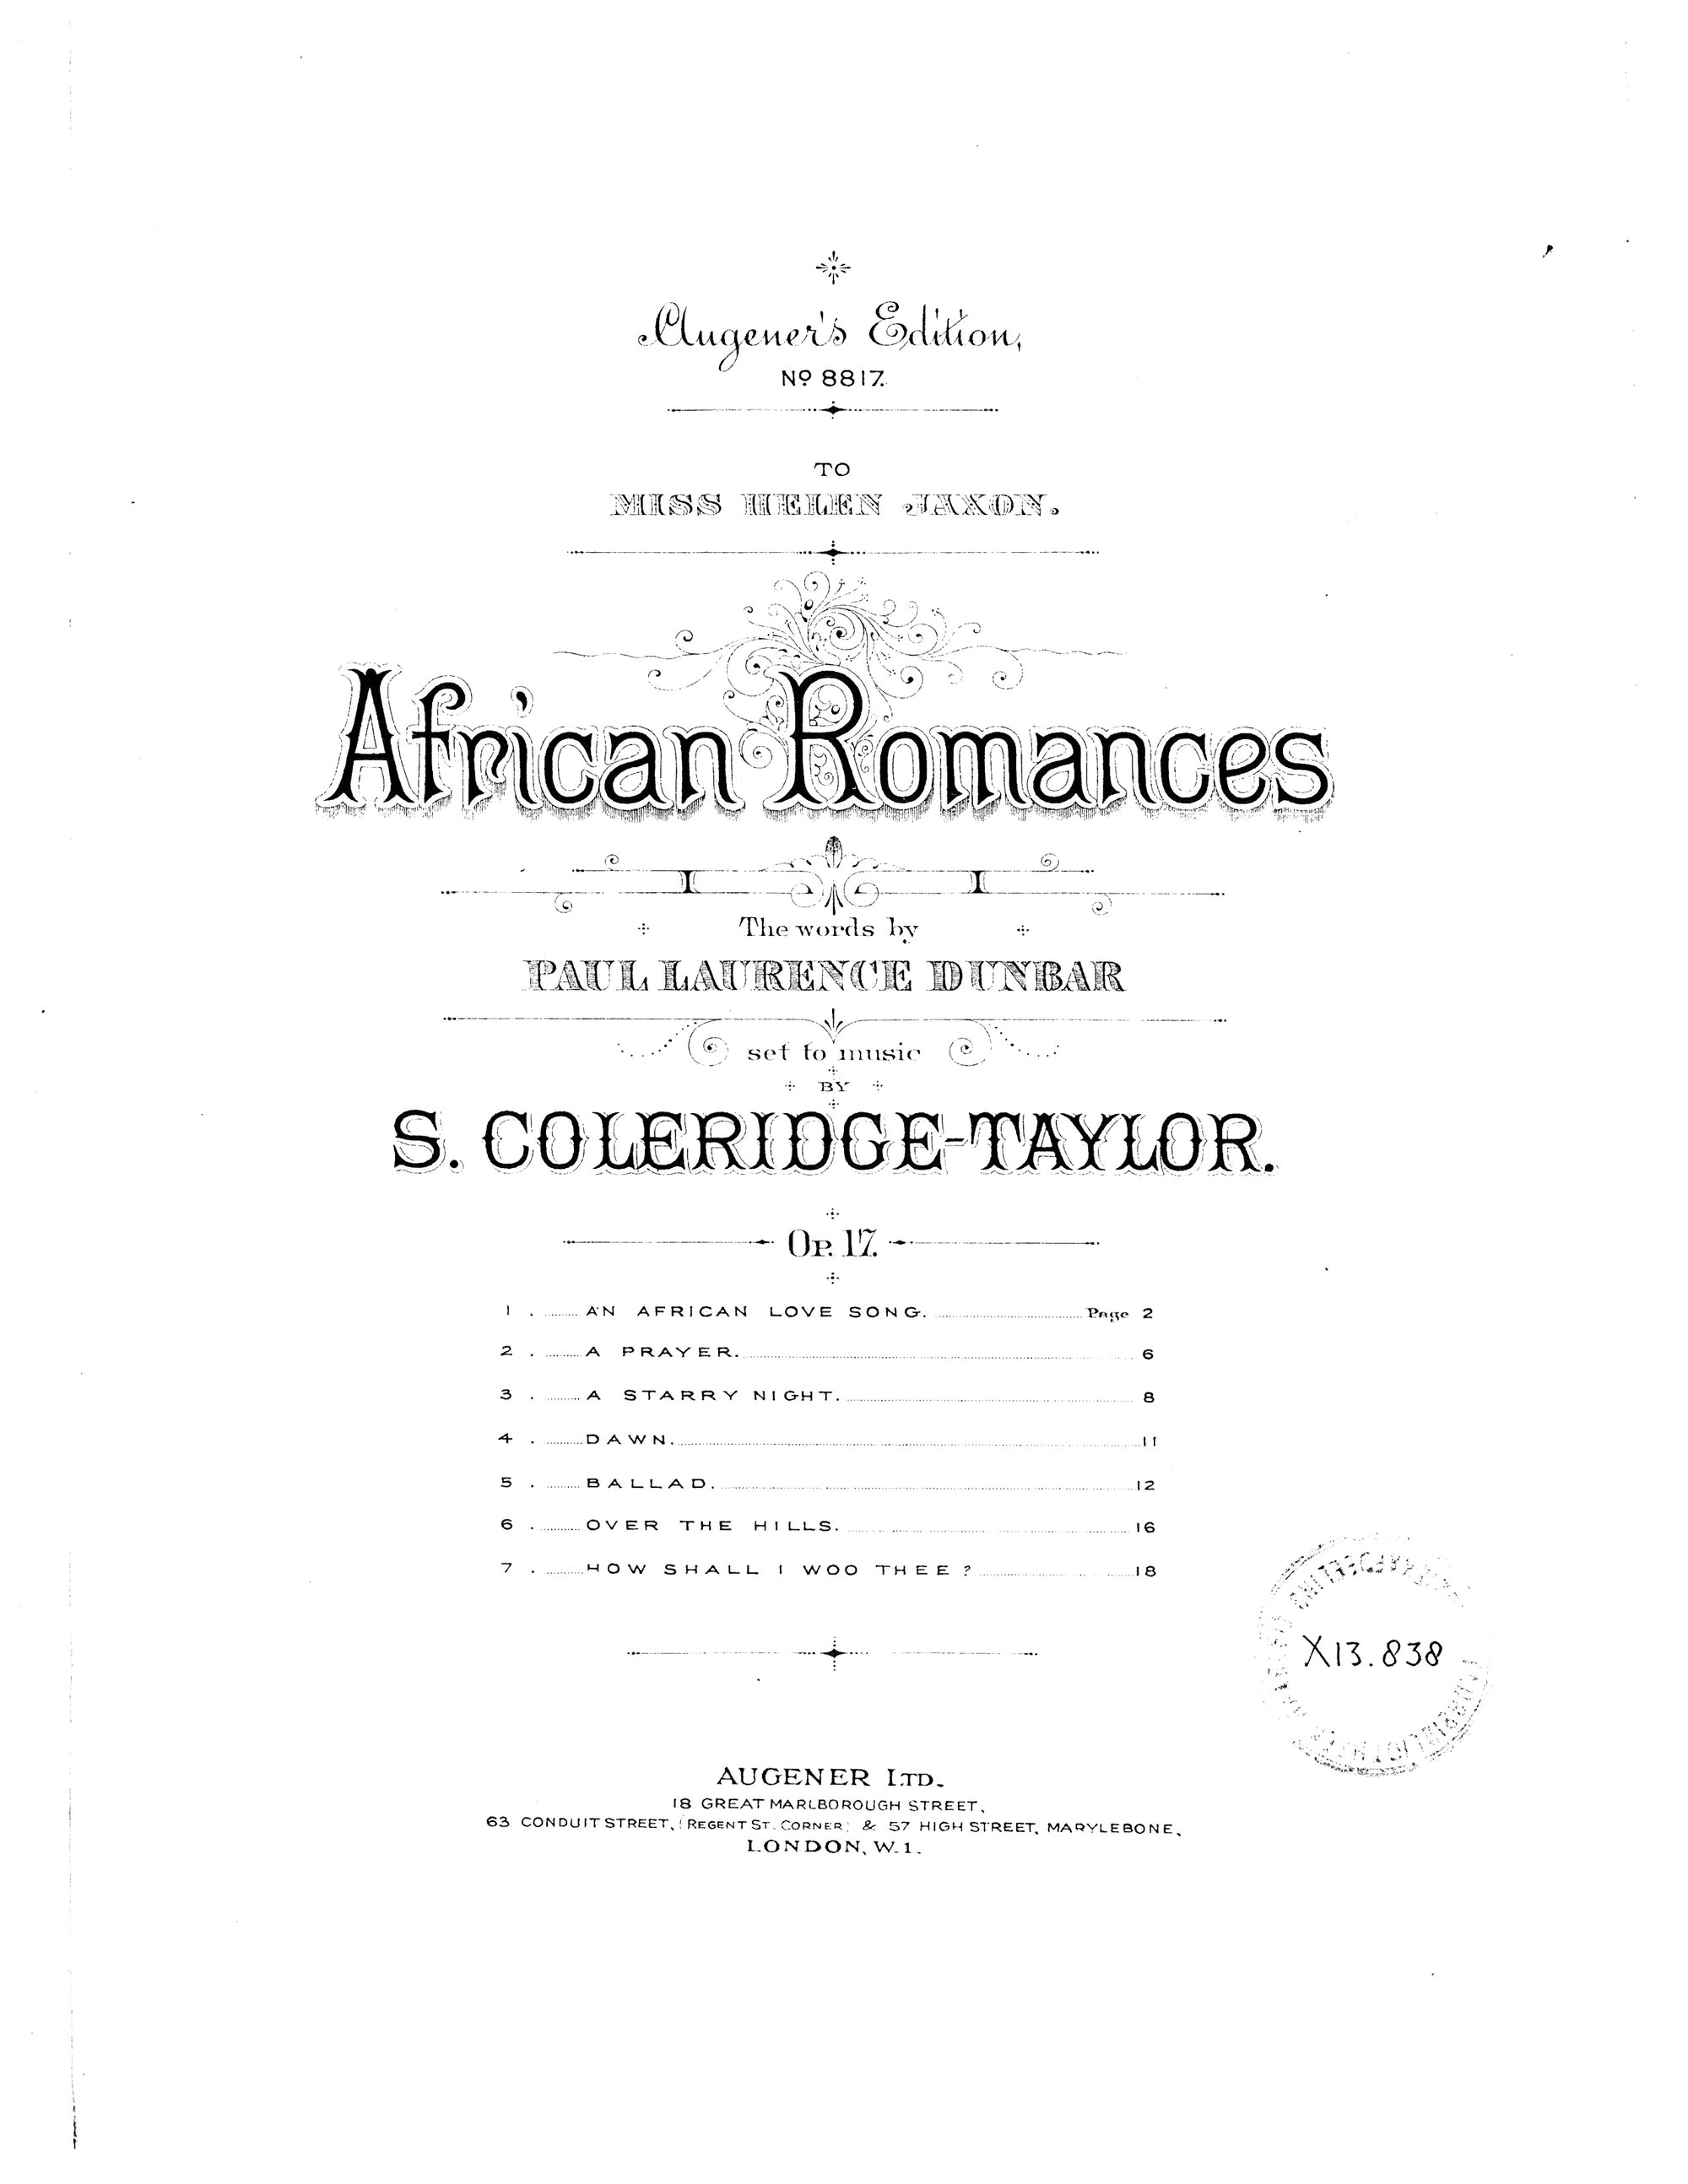 Coleridge-Taylor: African Romances, Op. 17